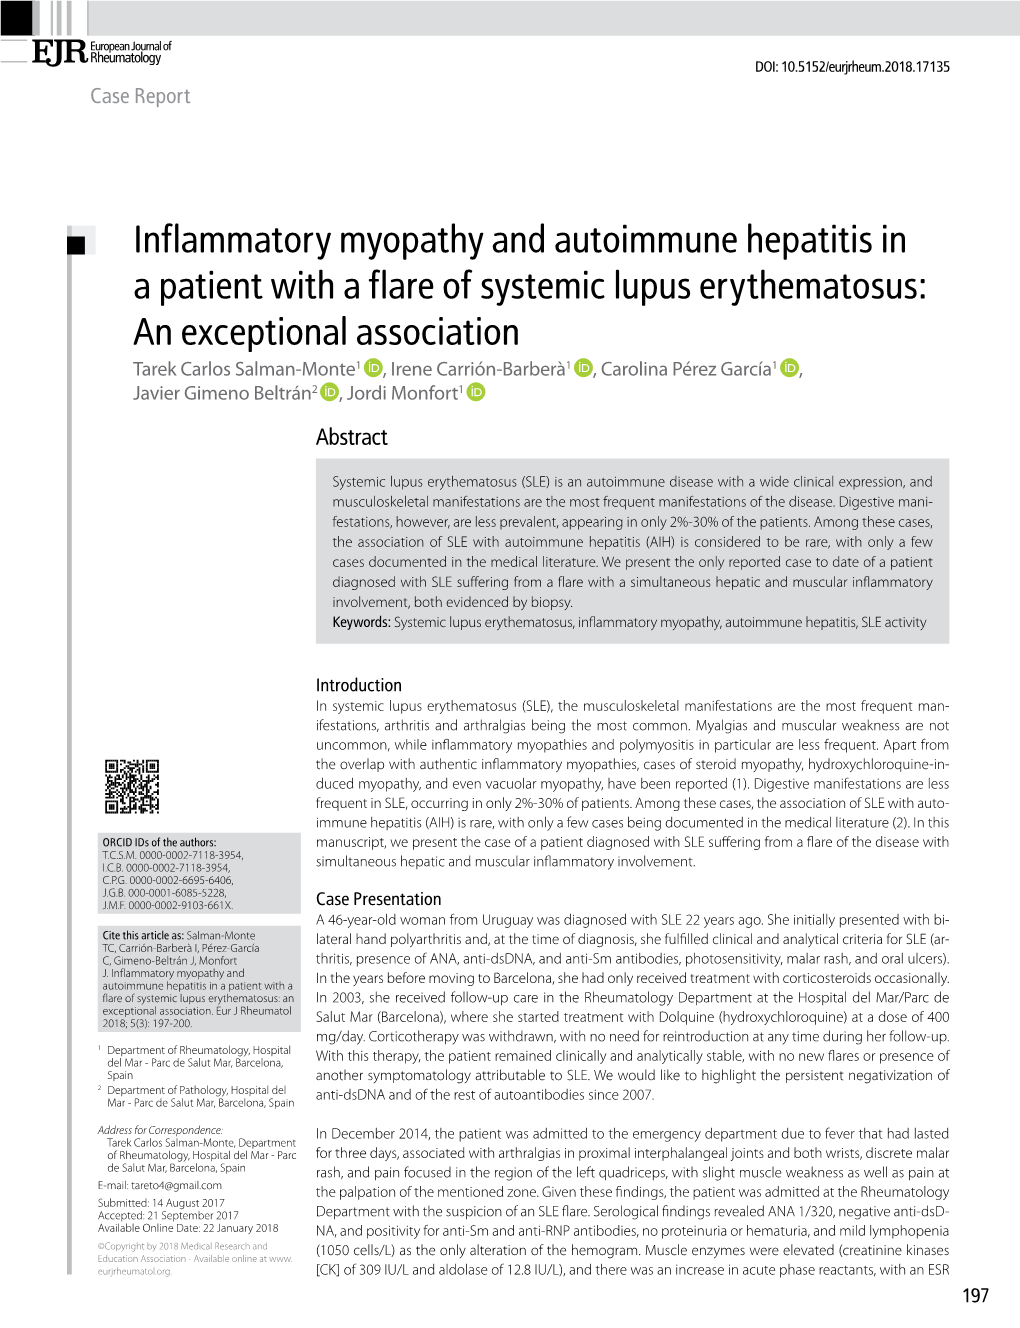 Inflammatory Myopathy and Autoimmune Hepatitis in a Patient